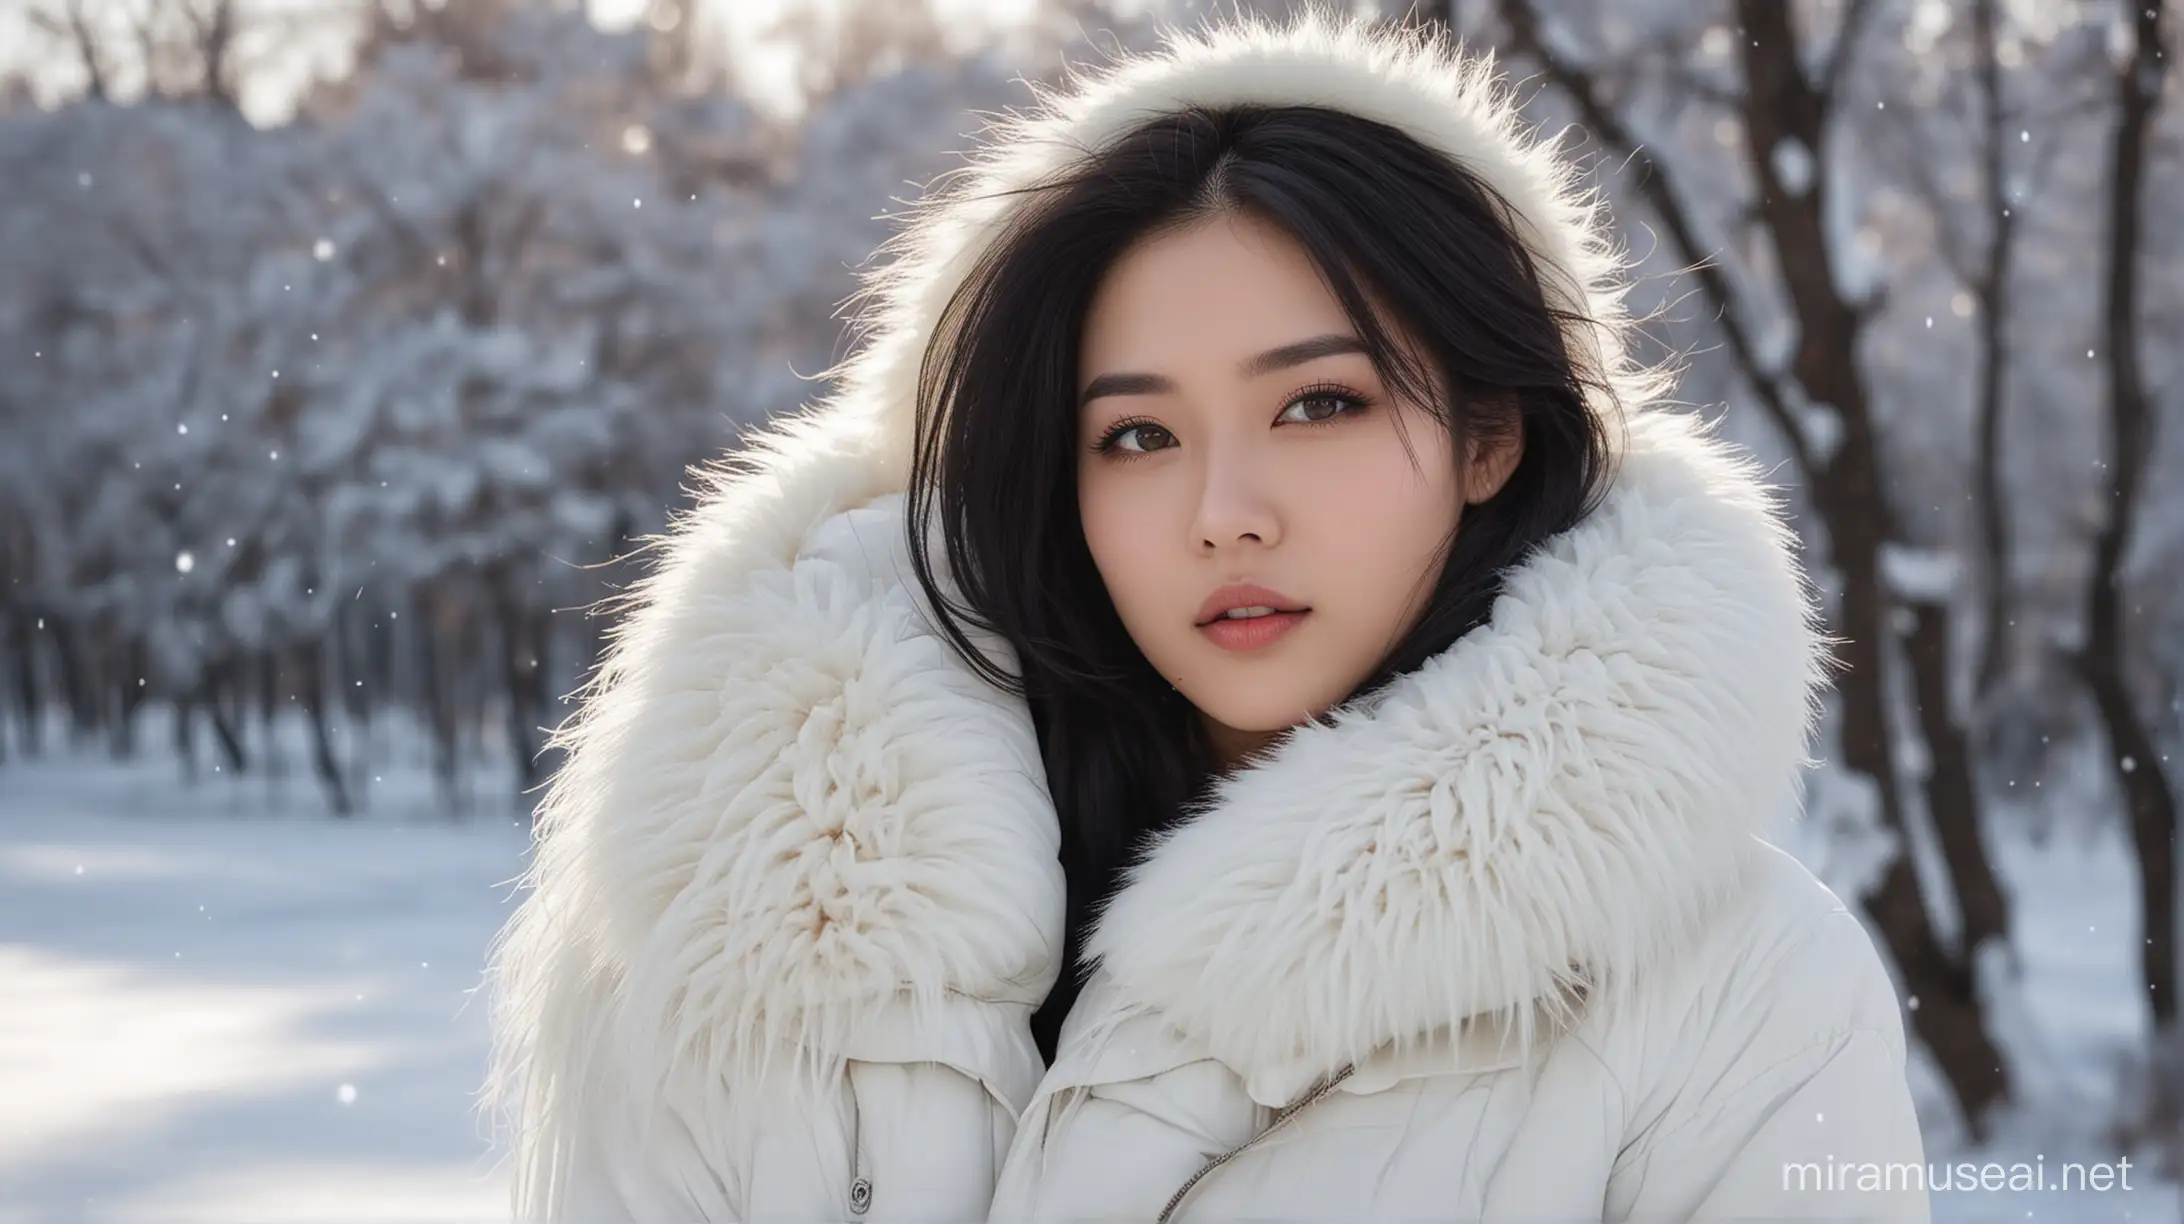 Elegant Woman in Snowy Oriental Setting with FurLined Jacket